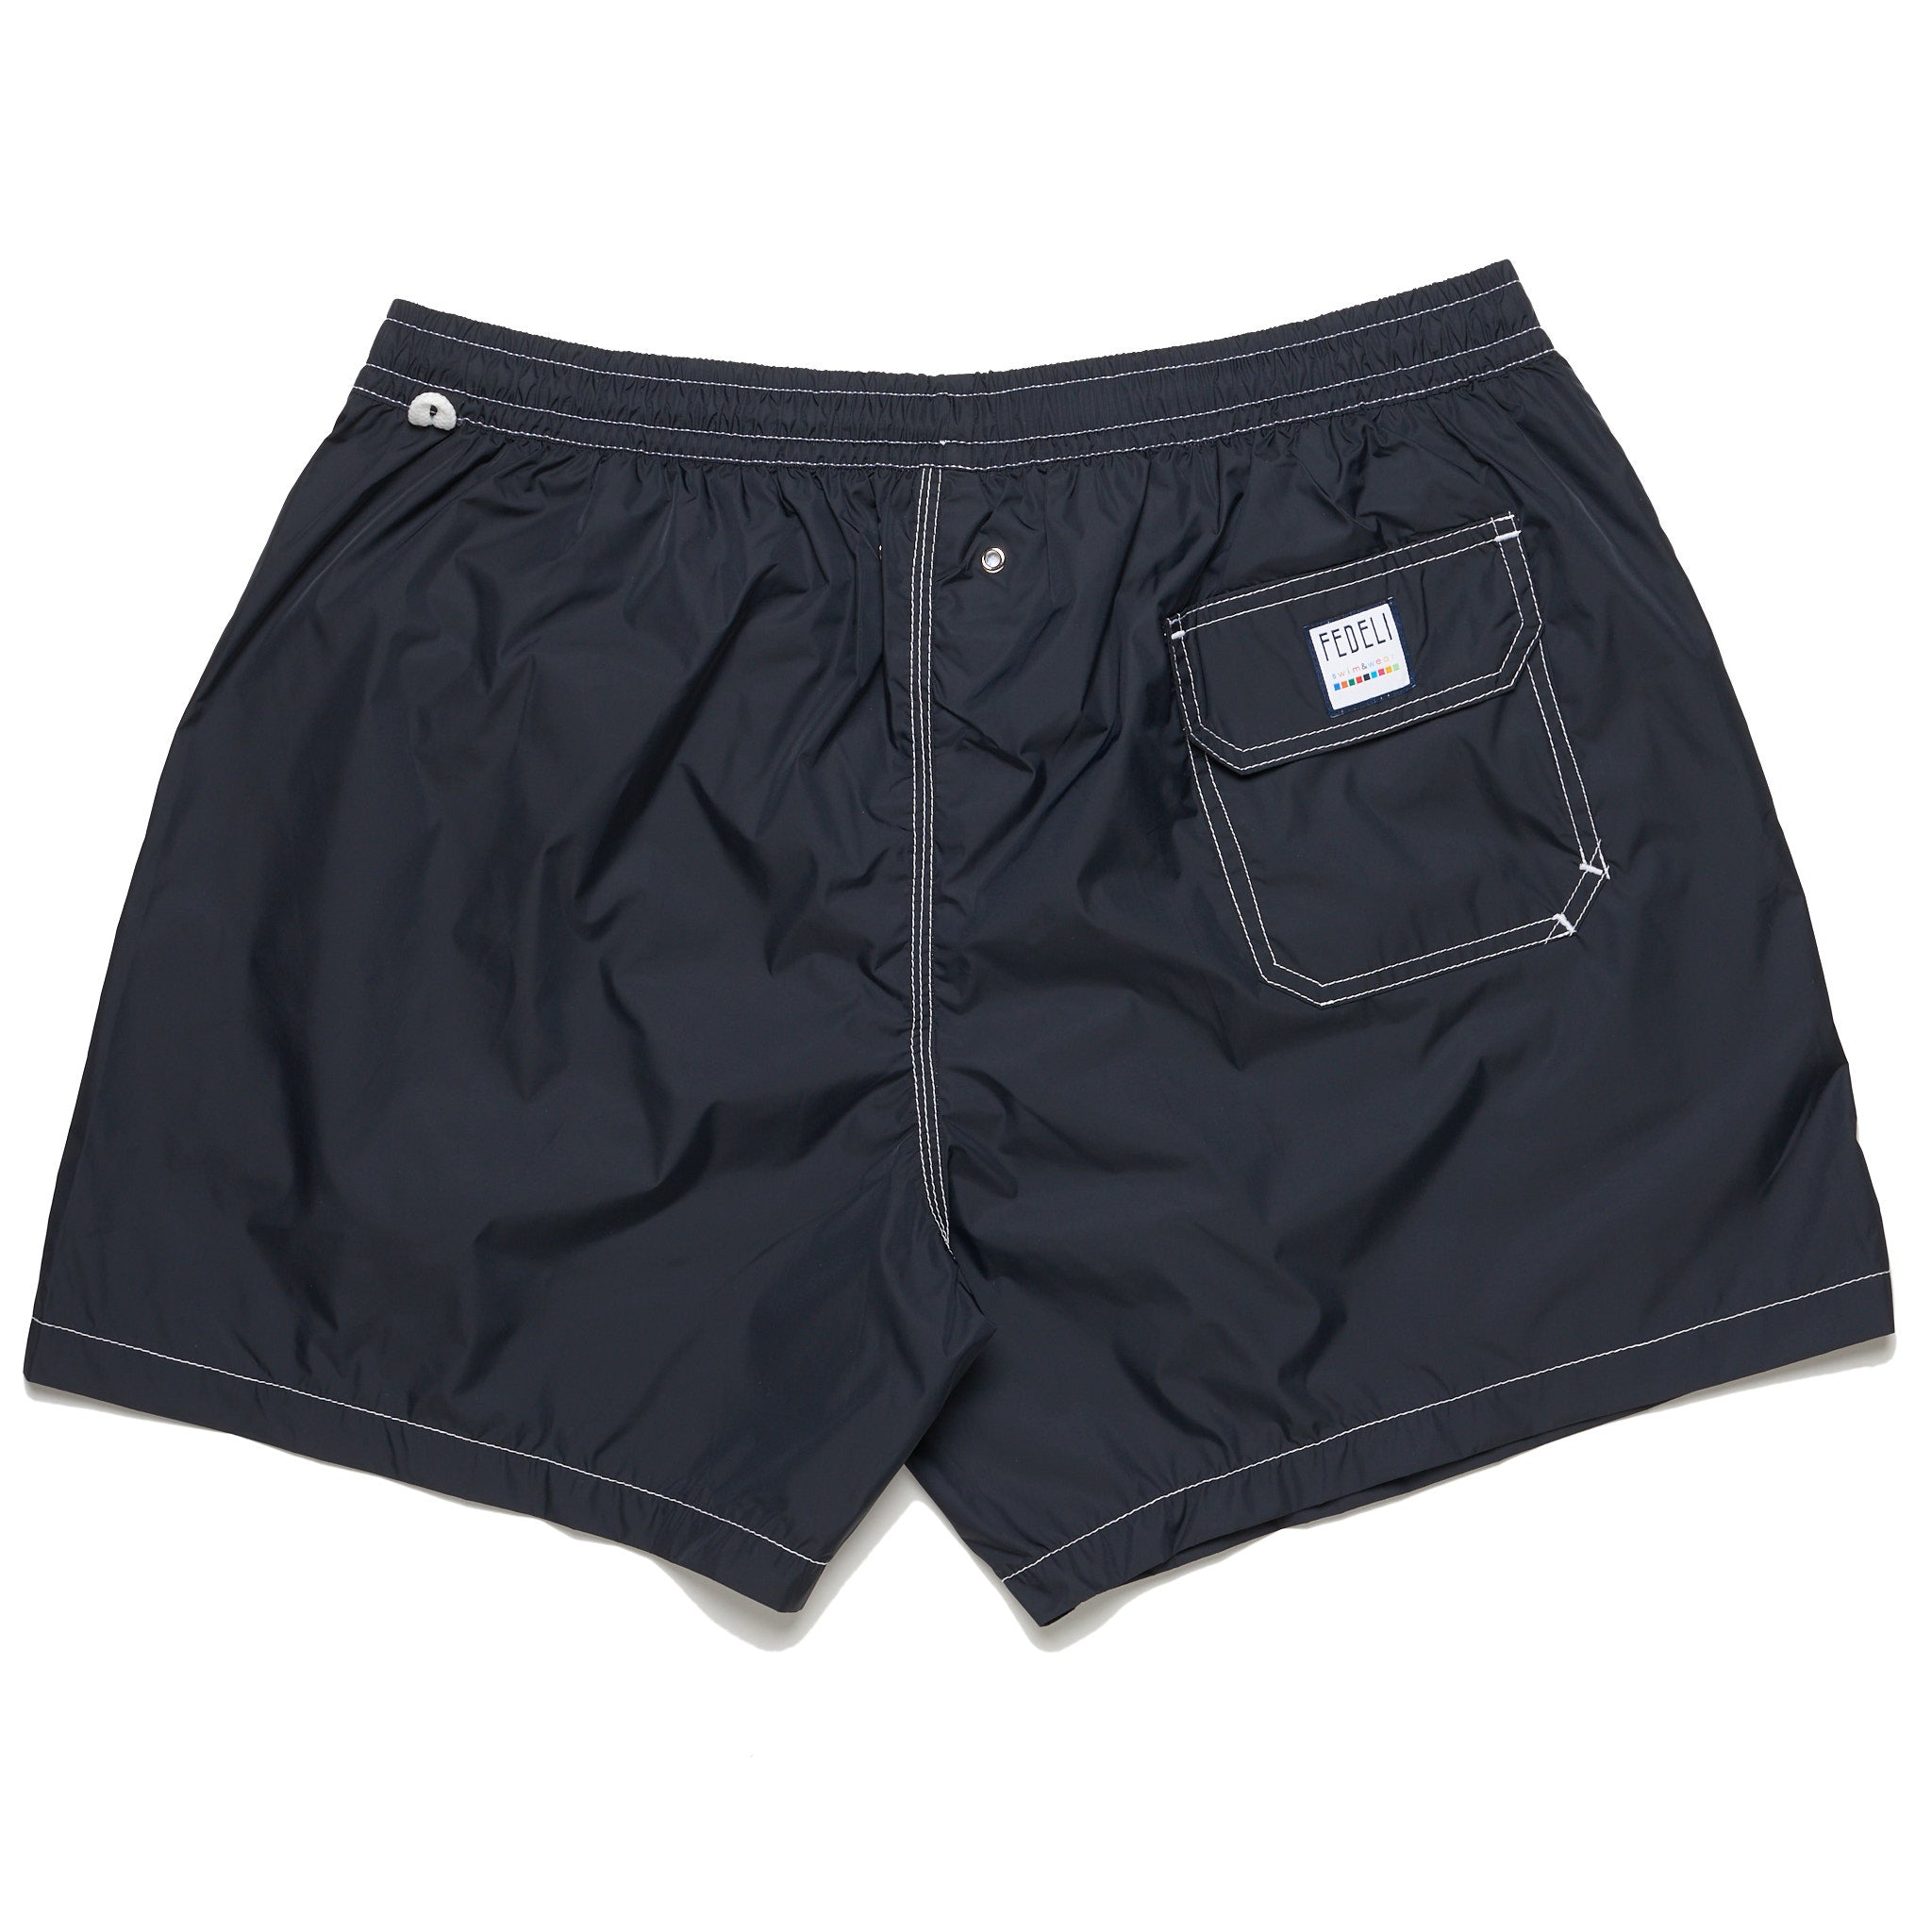 FEDELI Dark Gray Madeira Airstop Swim Shorts Trunks NEW Size 2XL FEDELI